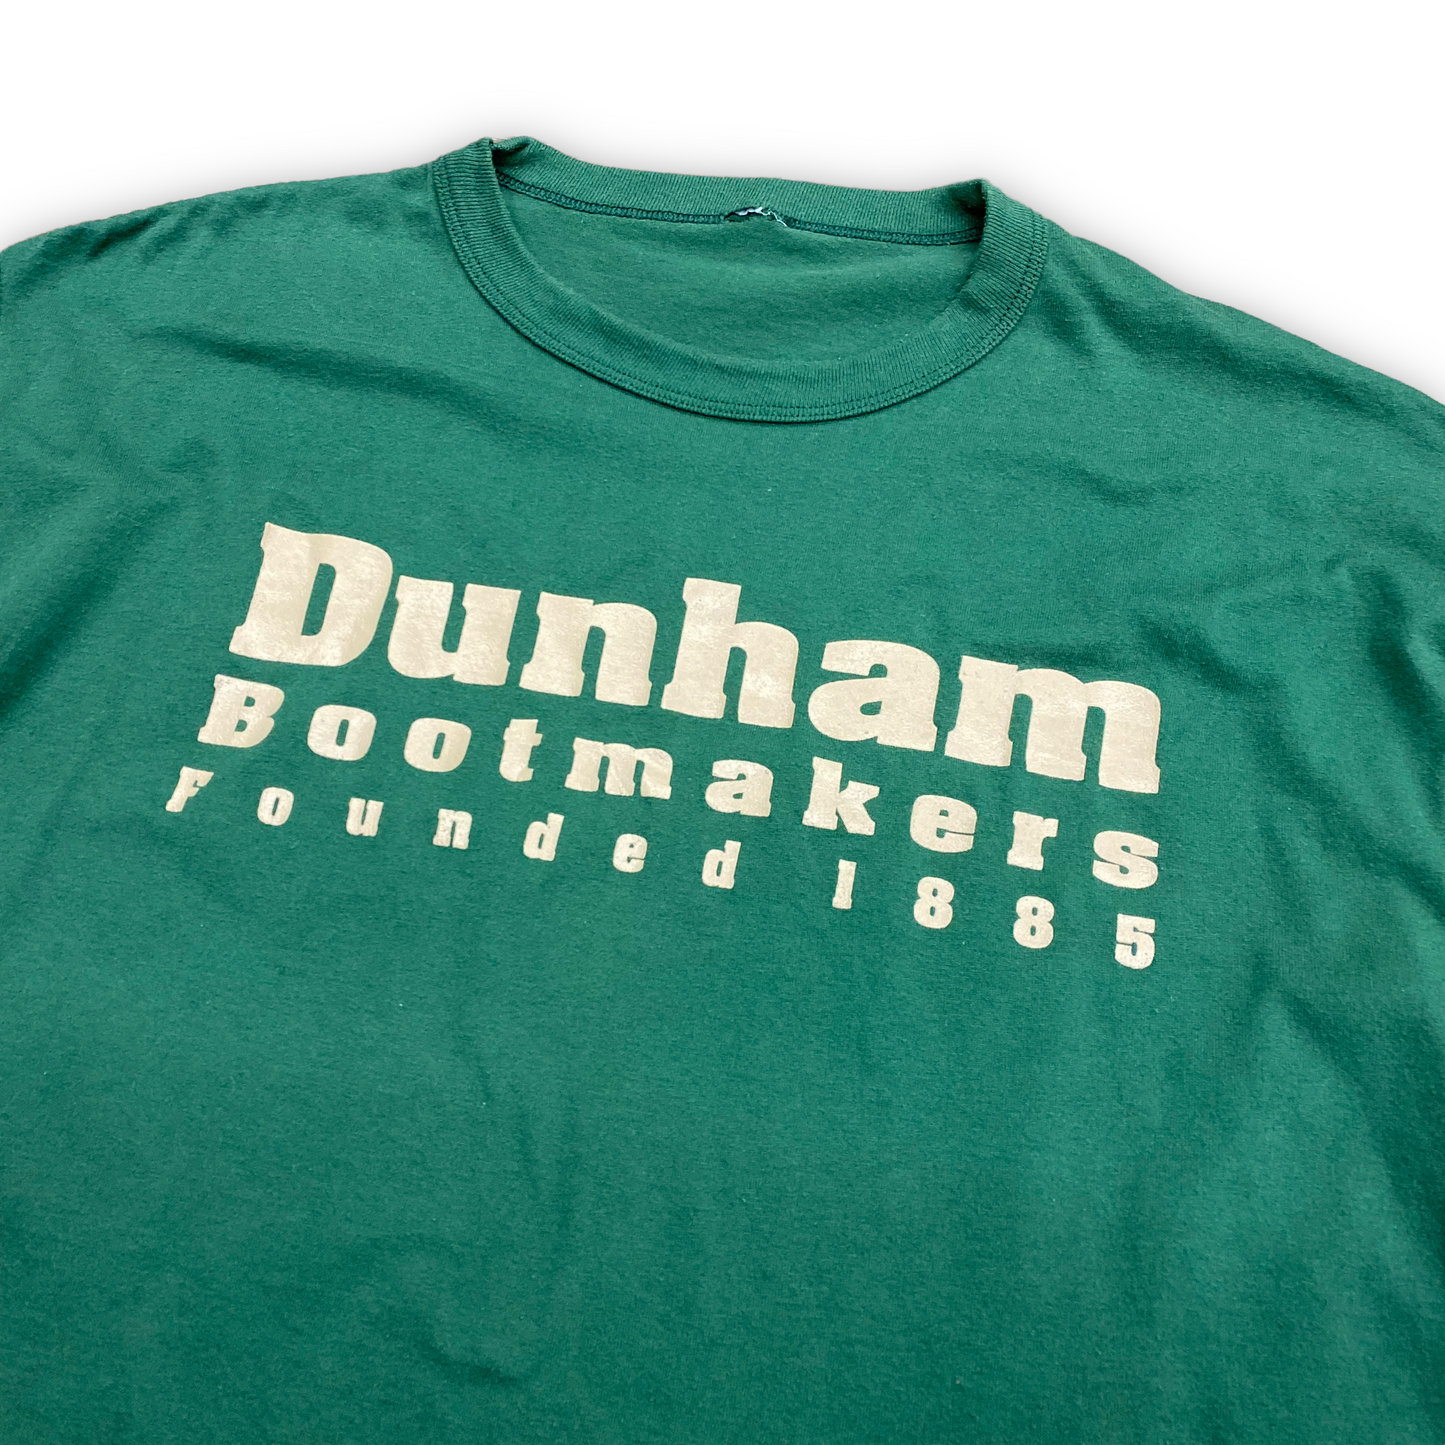 Vintage Single Stitch Dunham Bootmakers Green Tee - Size XL